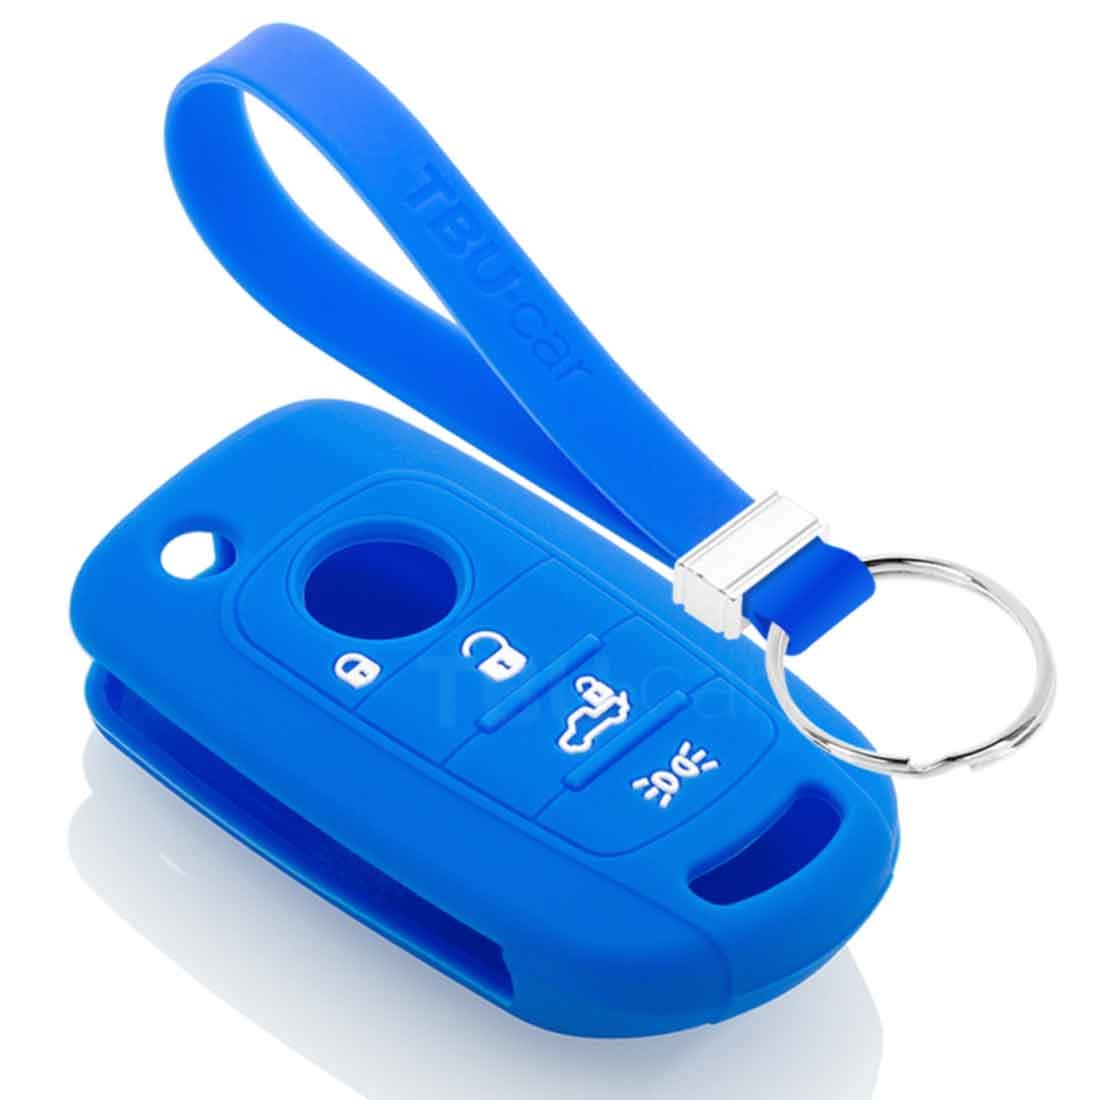 TBU car TBU car Autoschlüssel Hülle kompatibel mit Fiat 4 Tasten - Schutzhülle aus Silikon - Auto Schlüsselhülle Cover in Blau